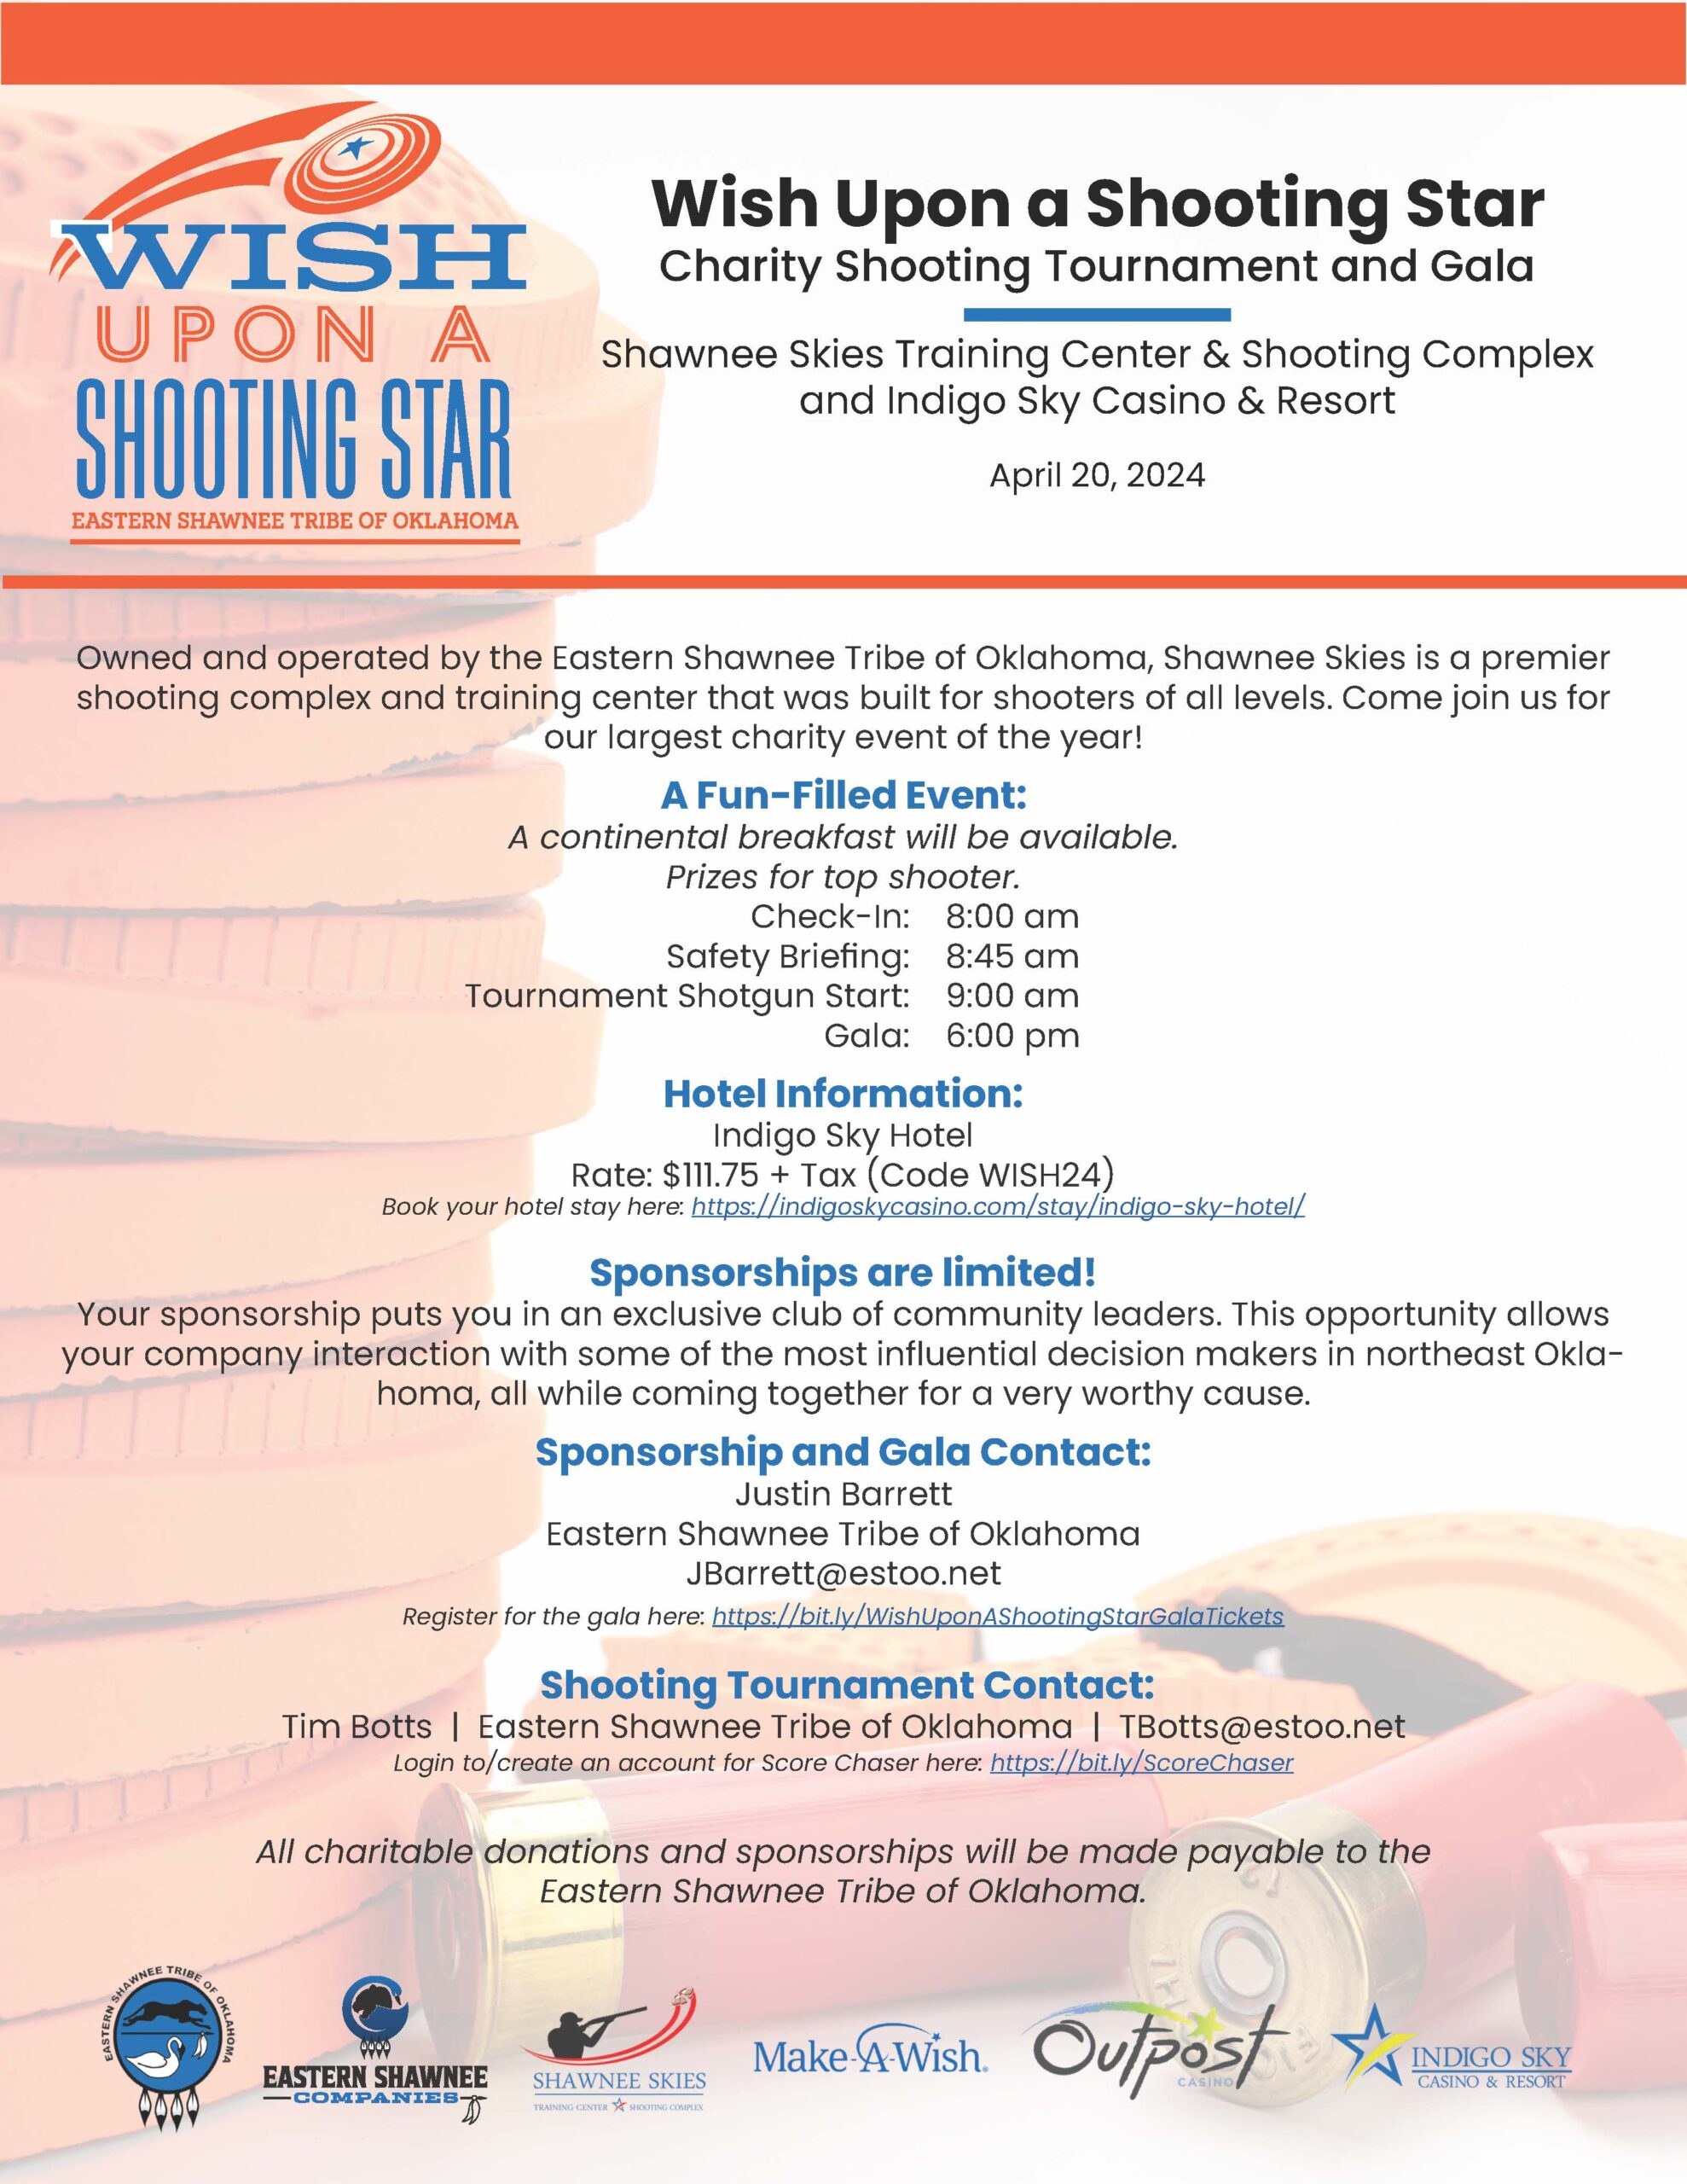 Wish Upon a Shooting Star-Charity Shooting Tournament and Gala, April 20, 2024